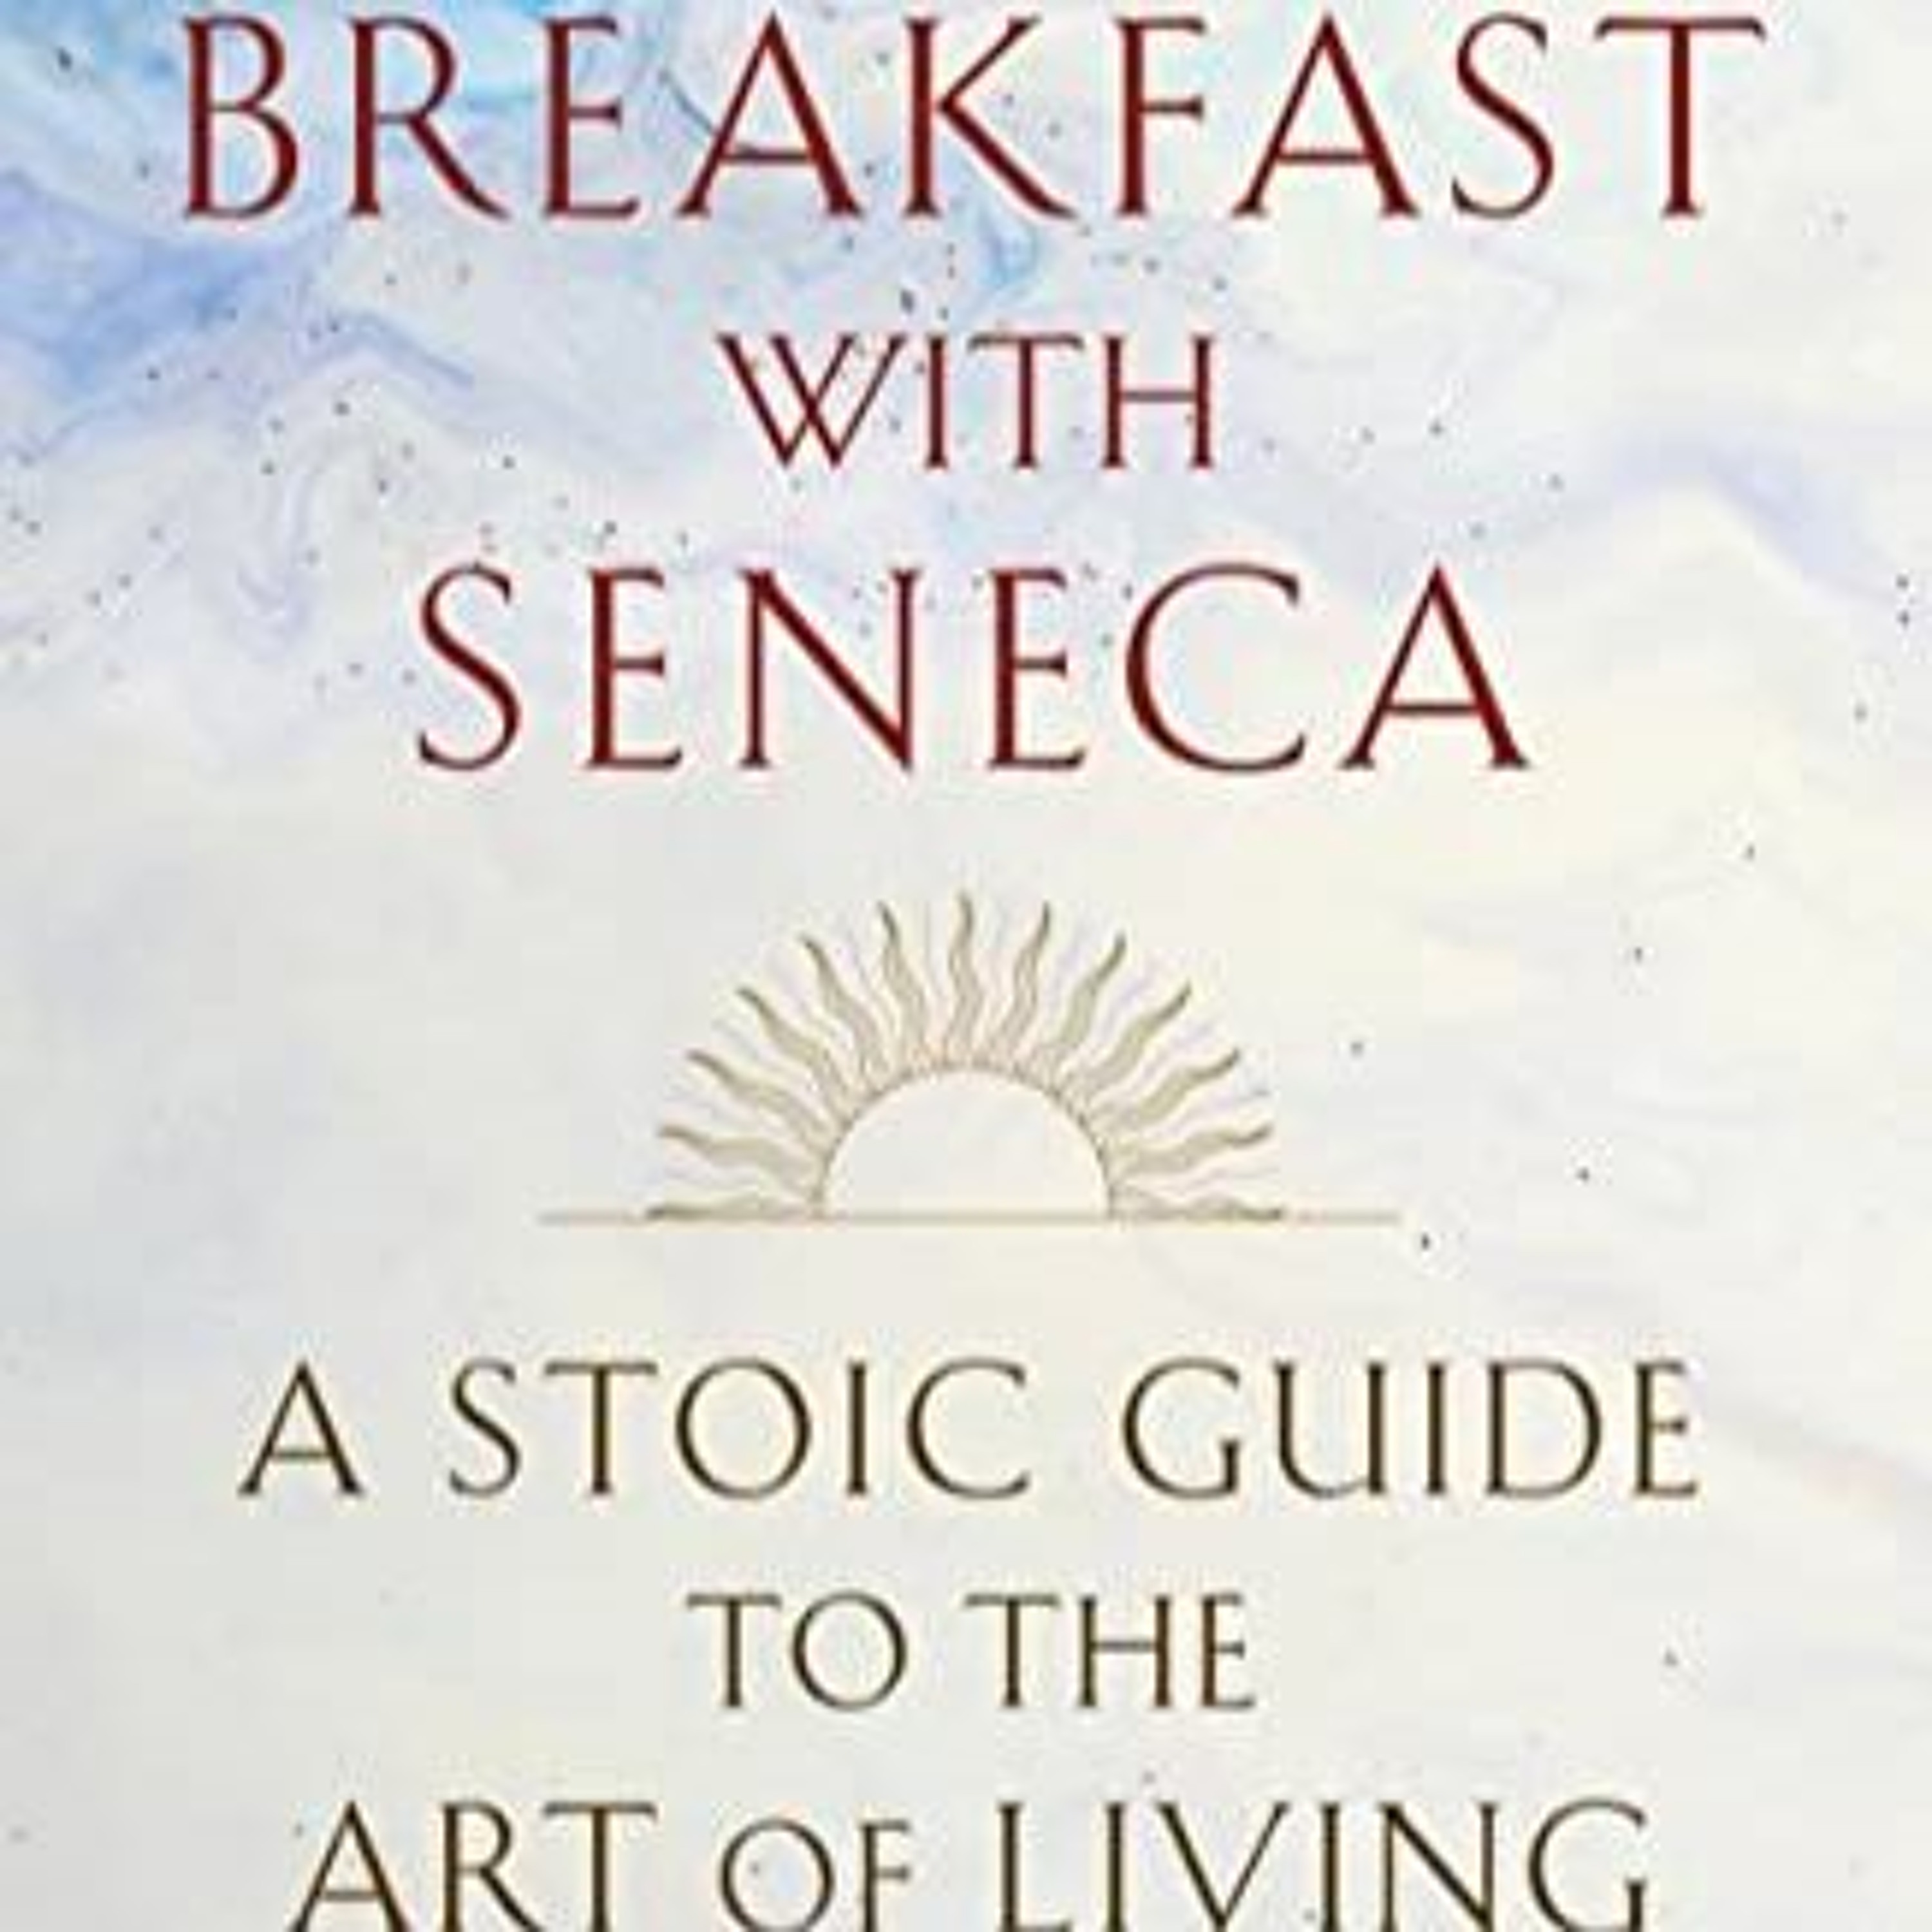 Episode 103: David Fideler author Of Breakfast with Seneca